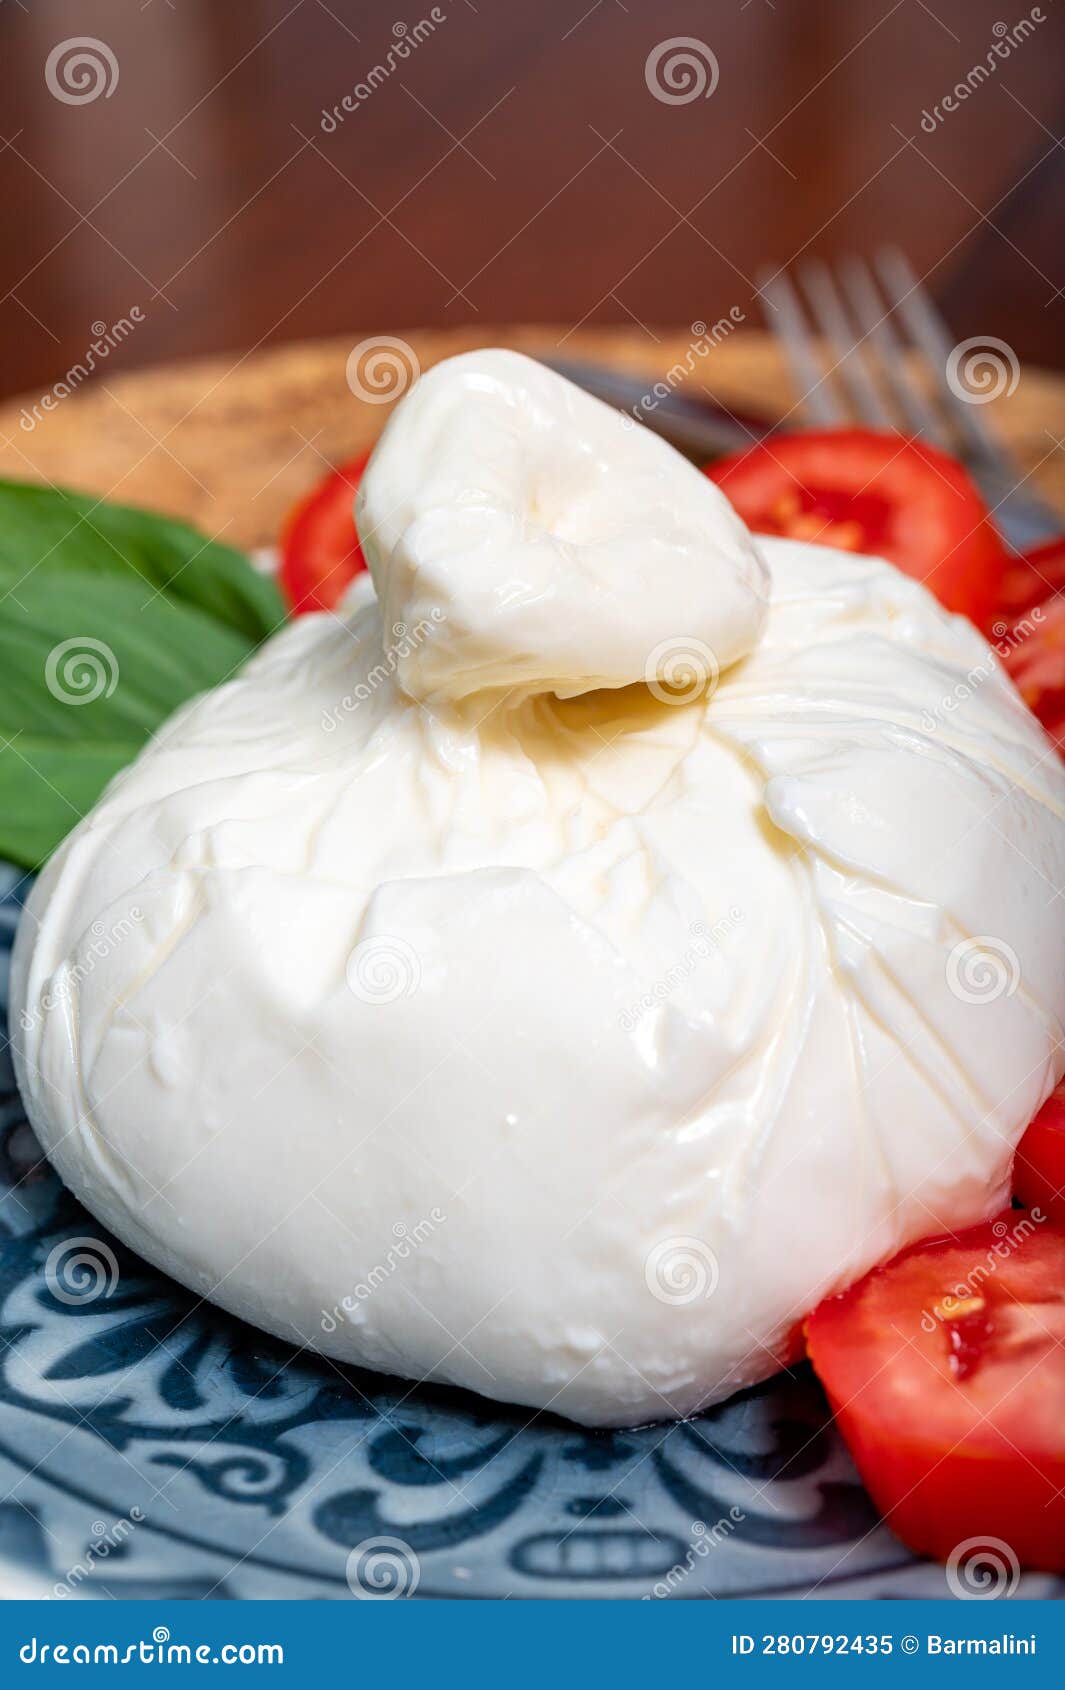 fresh handmade soft italian cheese from puglia, white ball of burrata foglia saporosa or burratina cheese made from mozzarella and